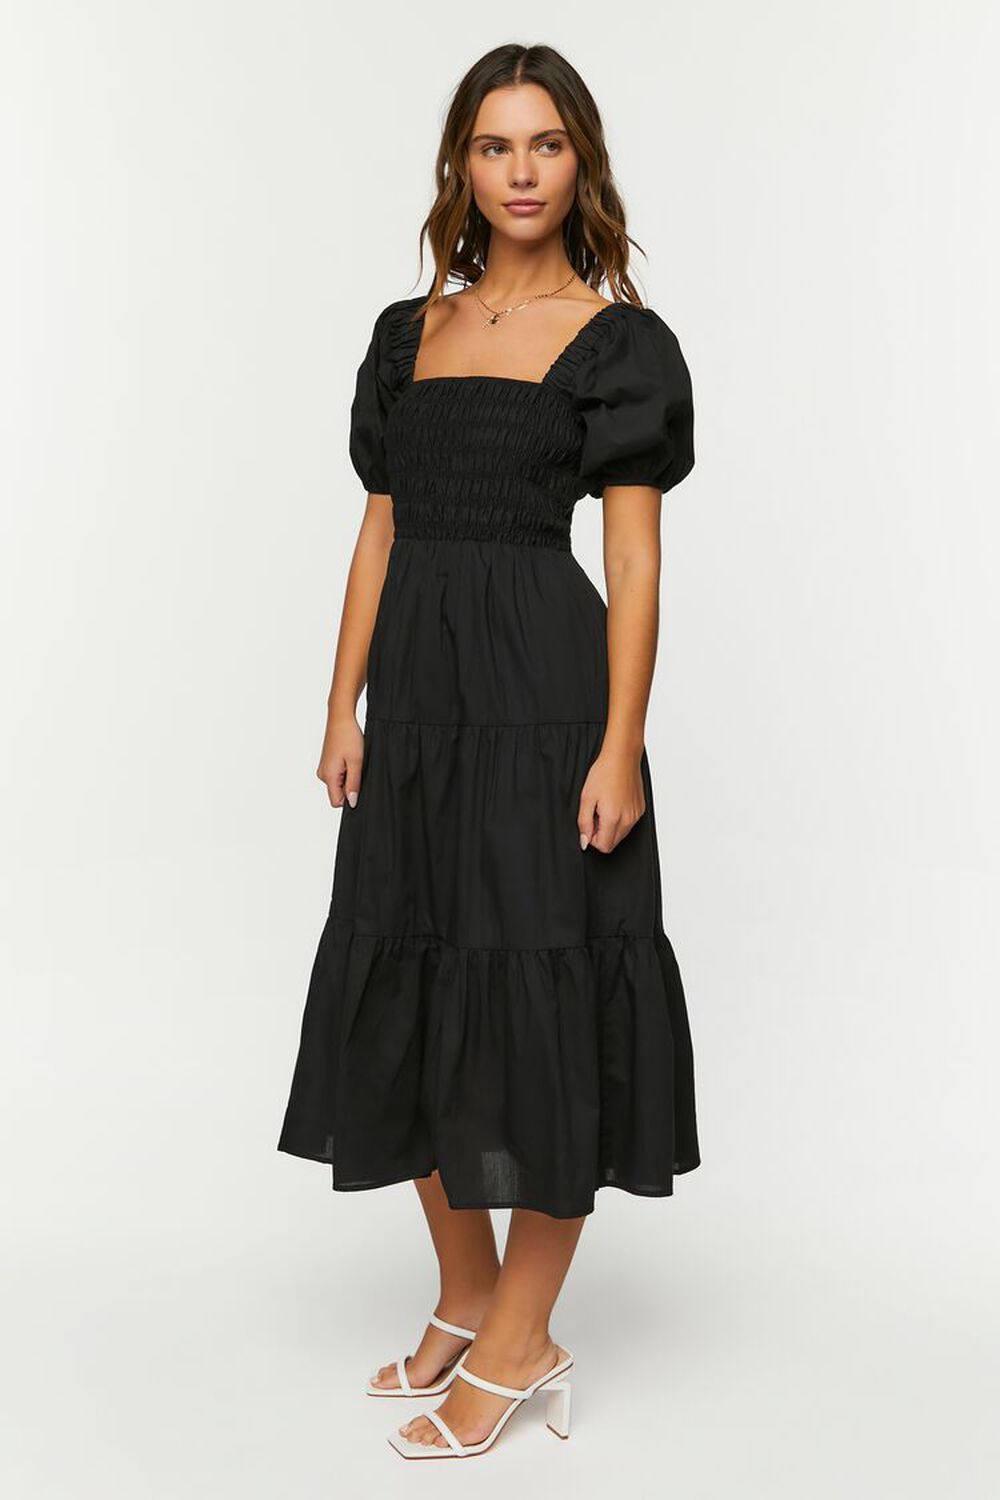 BLACK Smocked Puff-Sleeve Dress, image 2